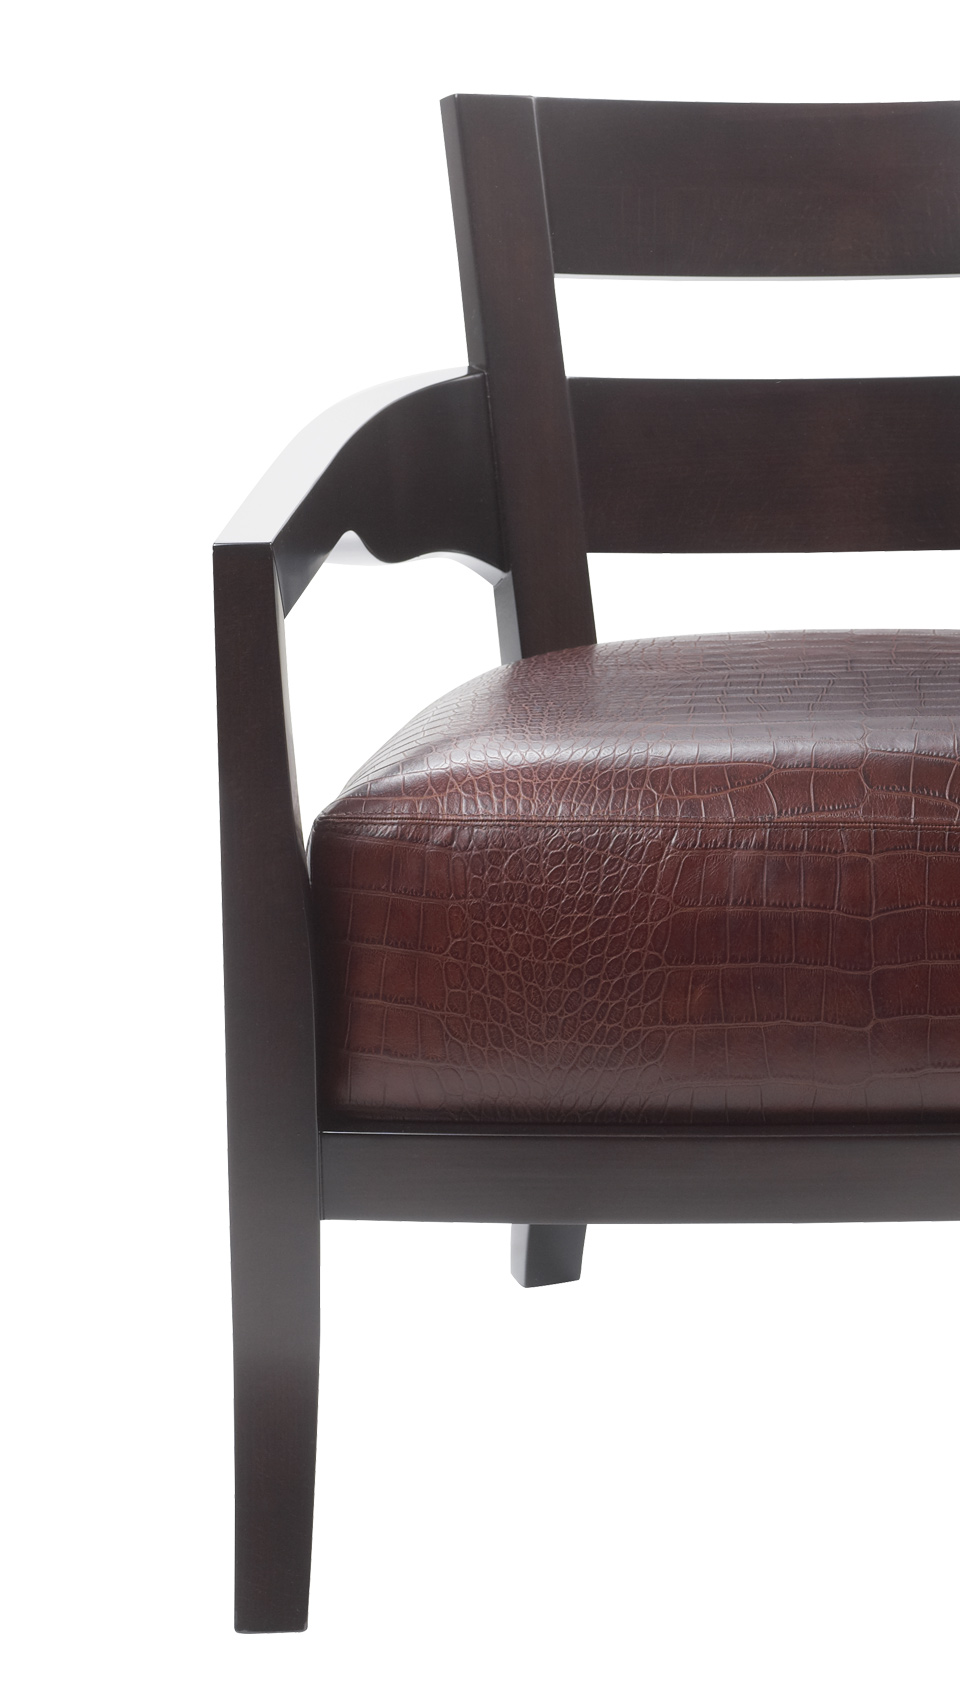 Africa&amp;nbsp;— деревянное кресло с обивкой из ткани или кожи из каталога Promemoria | Promemoria